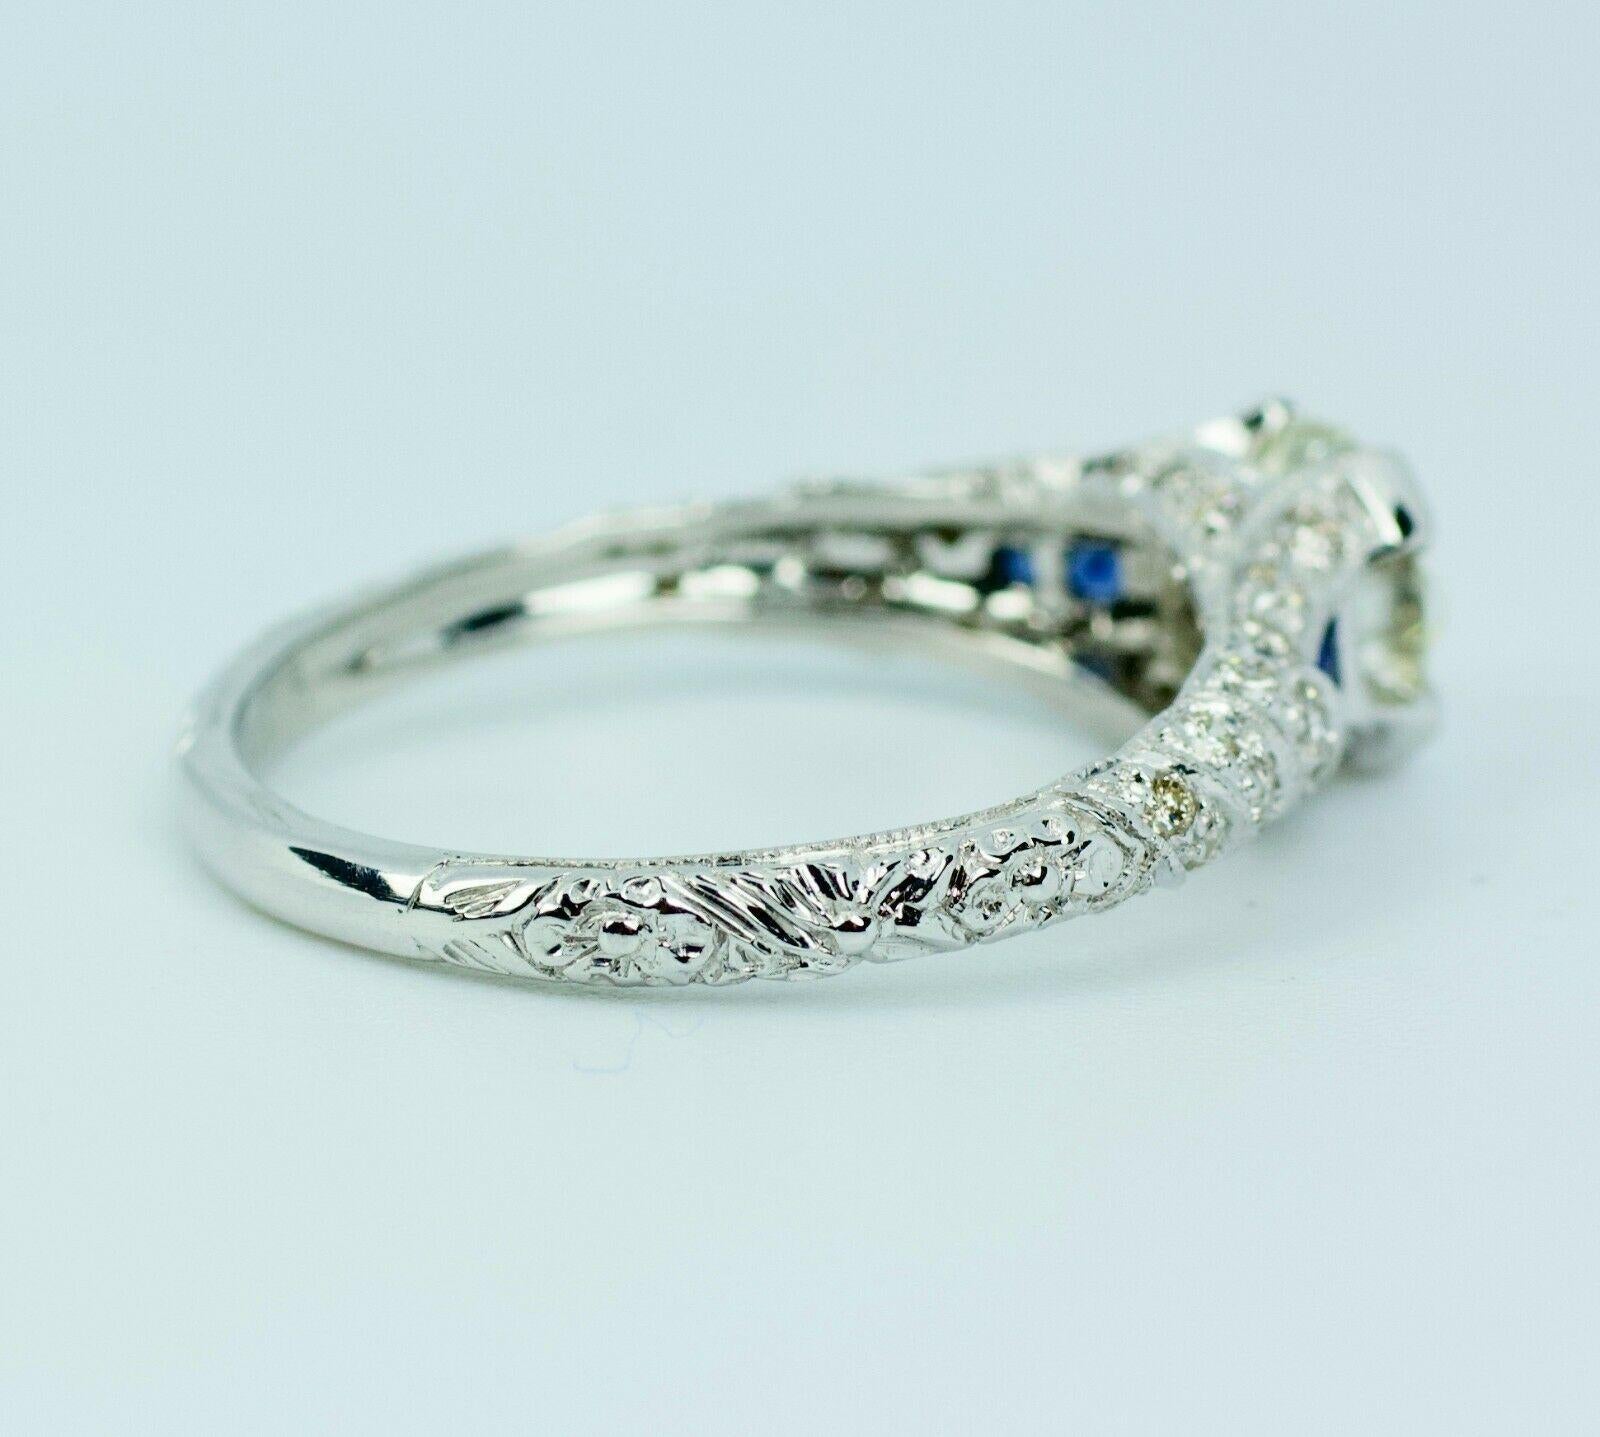 Women's Vintage 14k White Gold European Cut Center W/ Sapphire & Single Cut Diamond Ring